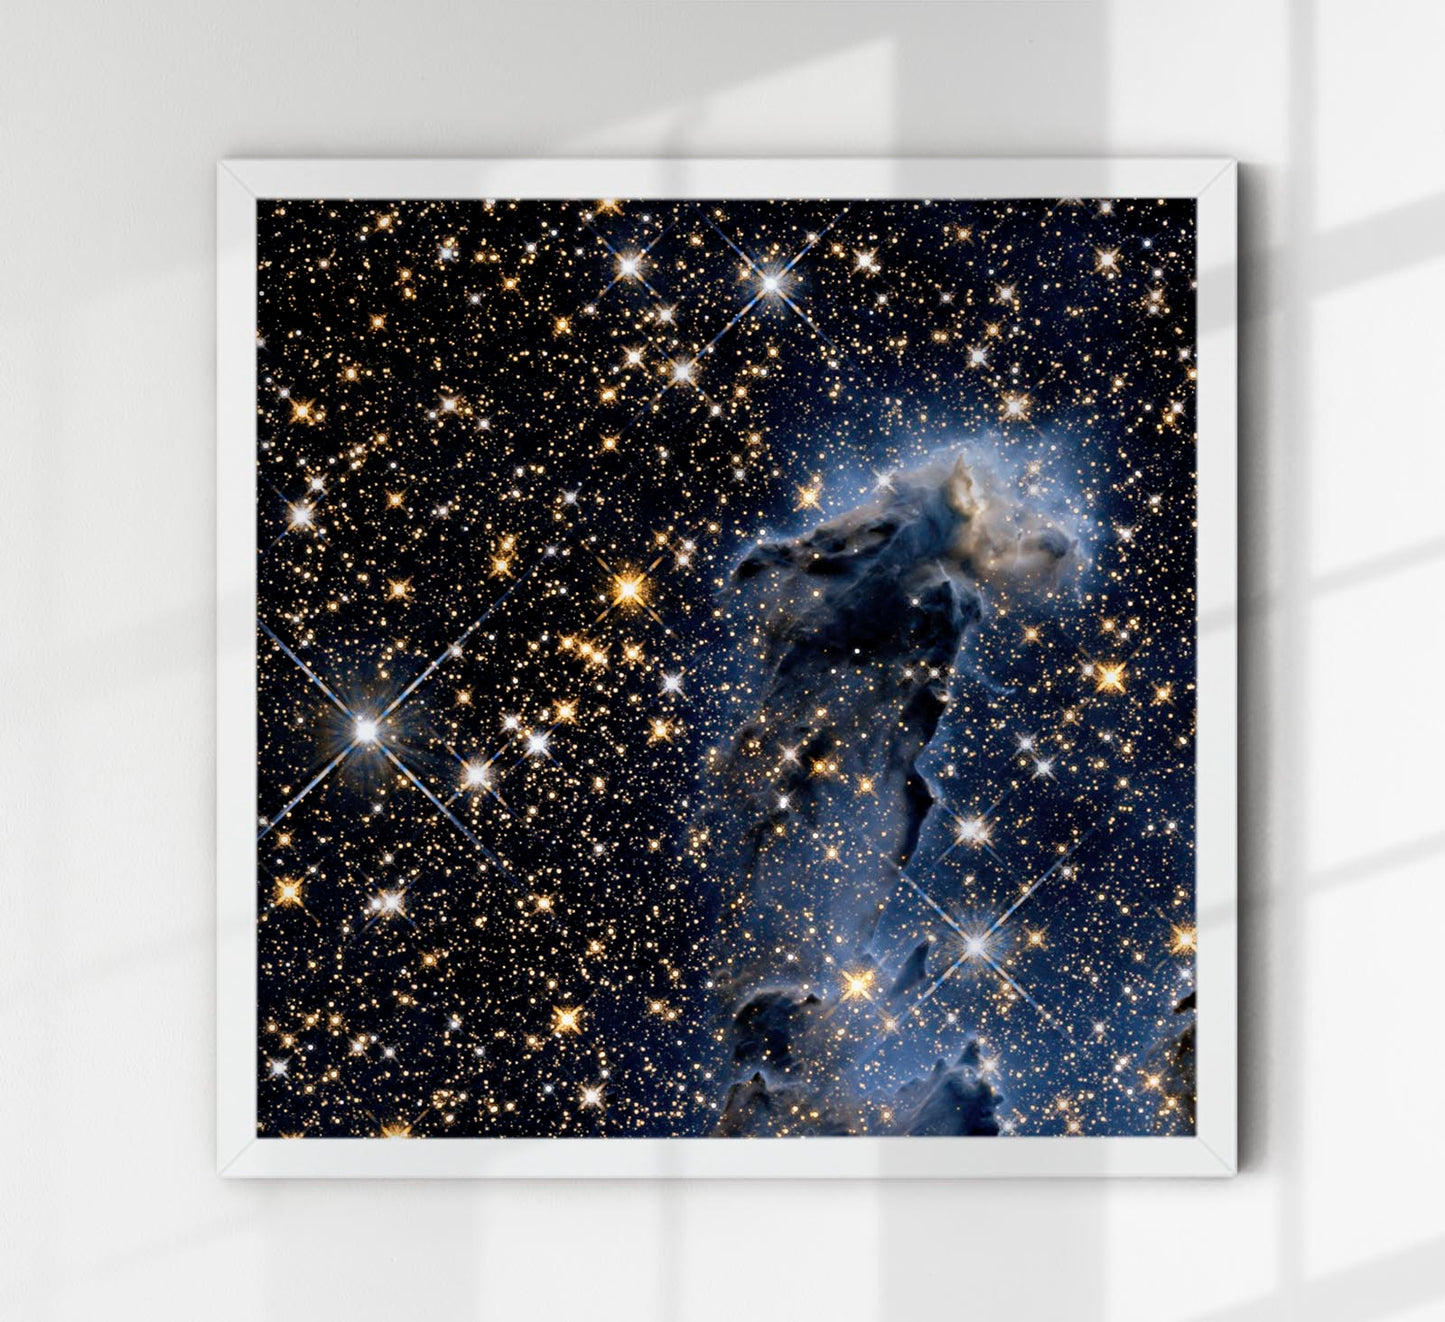 Pillars of Creation (The Eagle Nebula) by NASA